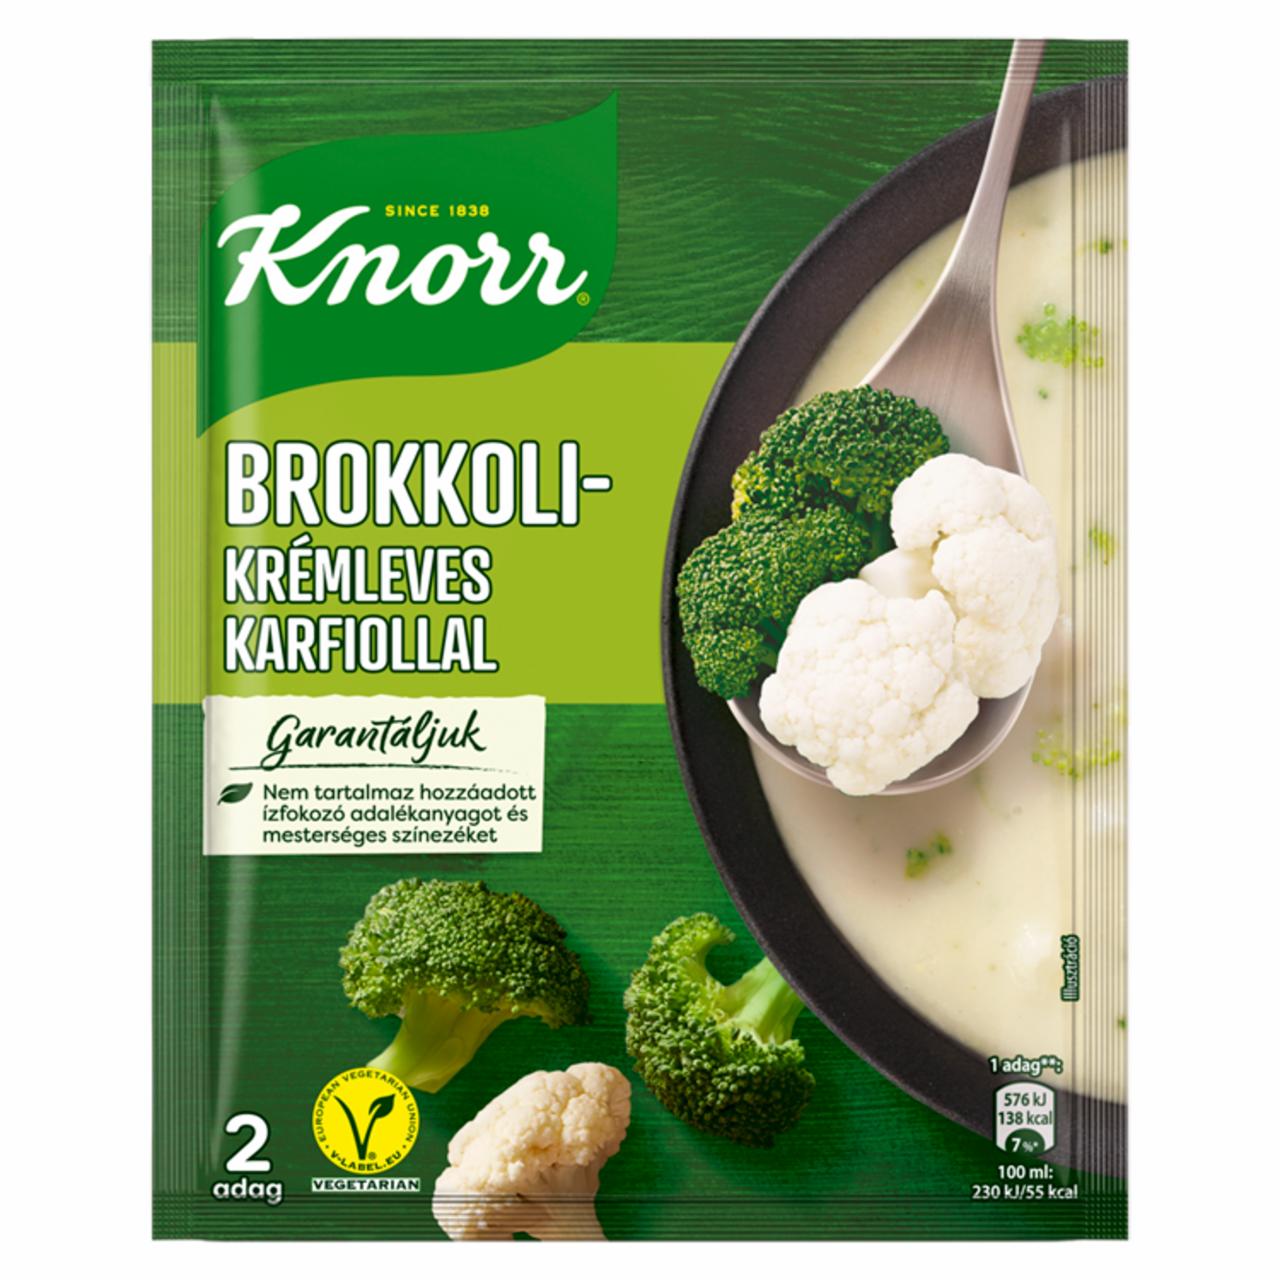 Képek - Knorr brokkolikrémleves karfiollal 51 g